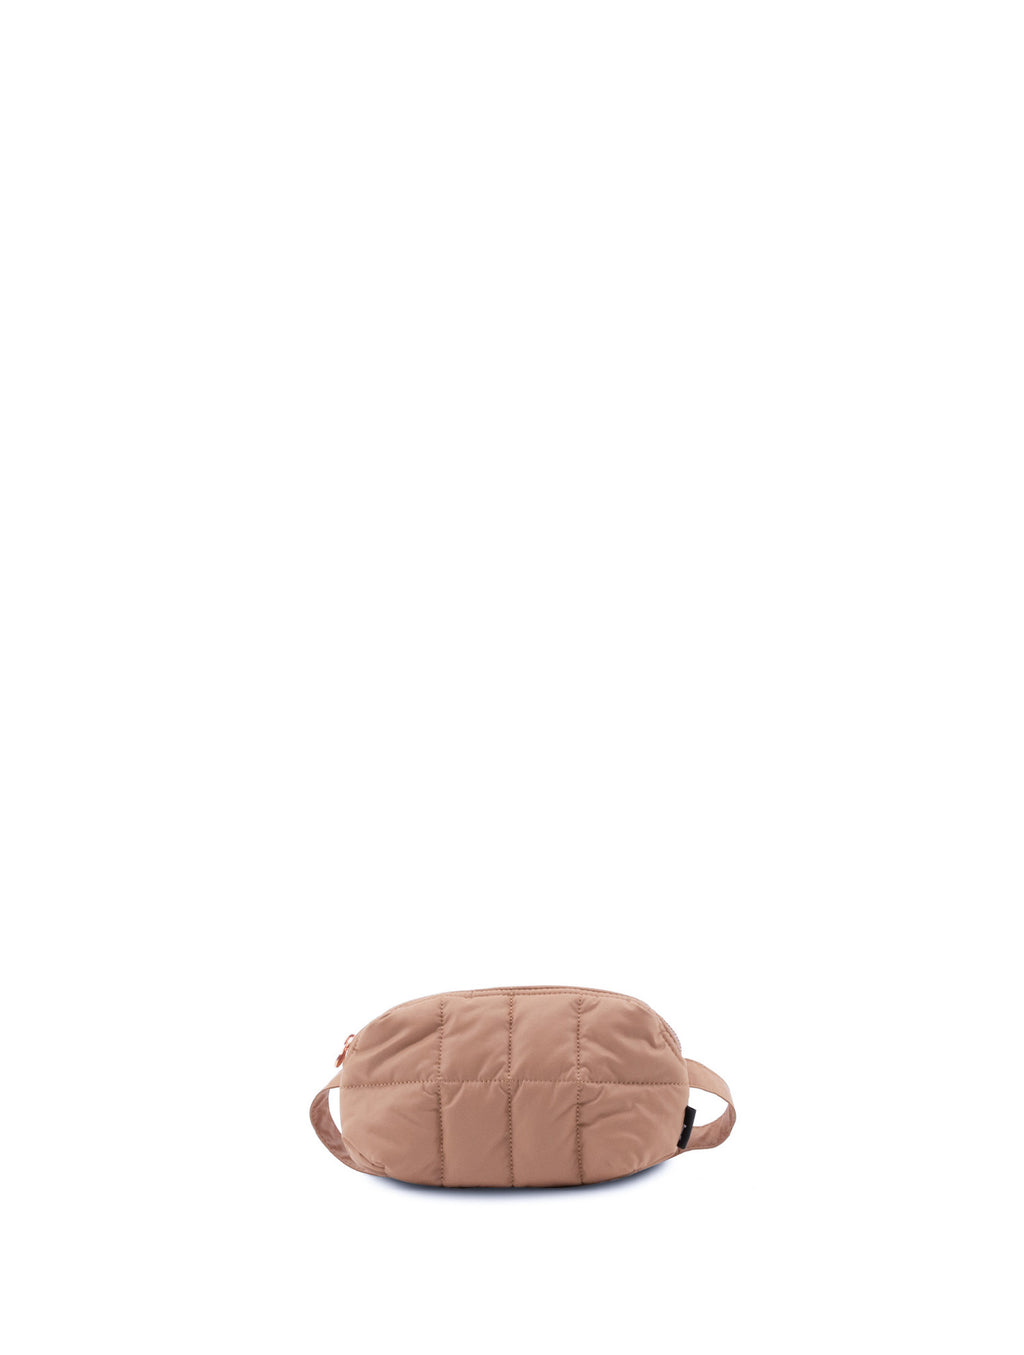 cilou puffy belt bag | macaroon